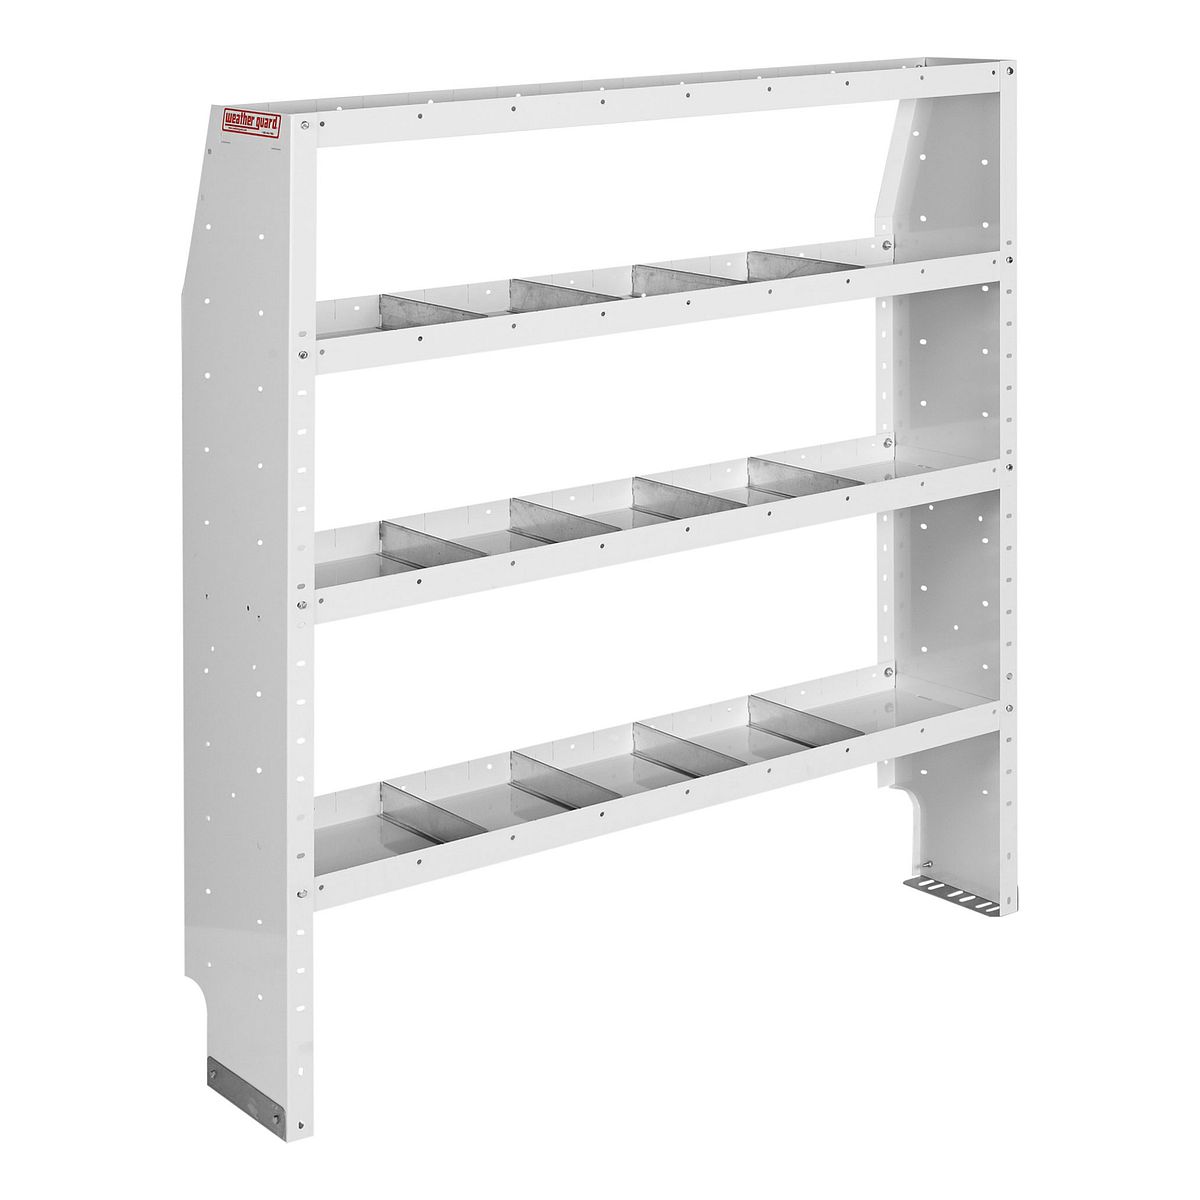 Adjustable 4 Shelf Unit - 60 in. x 52 in. x 13.5 in. Image